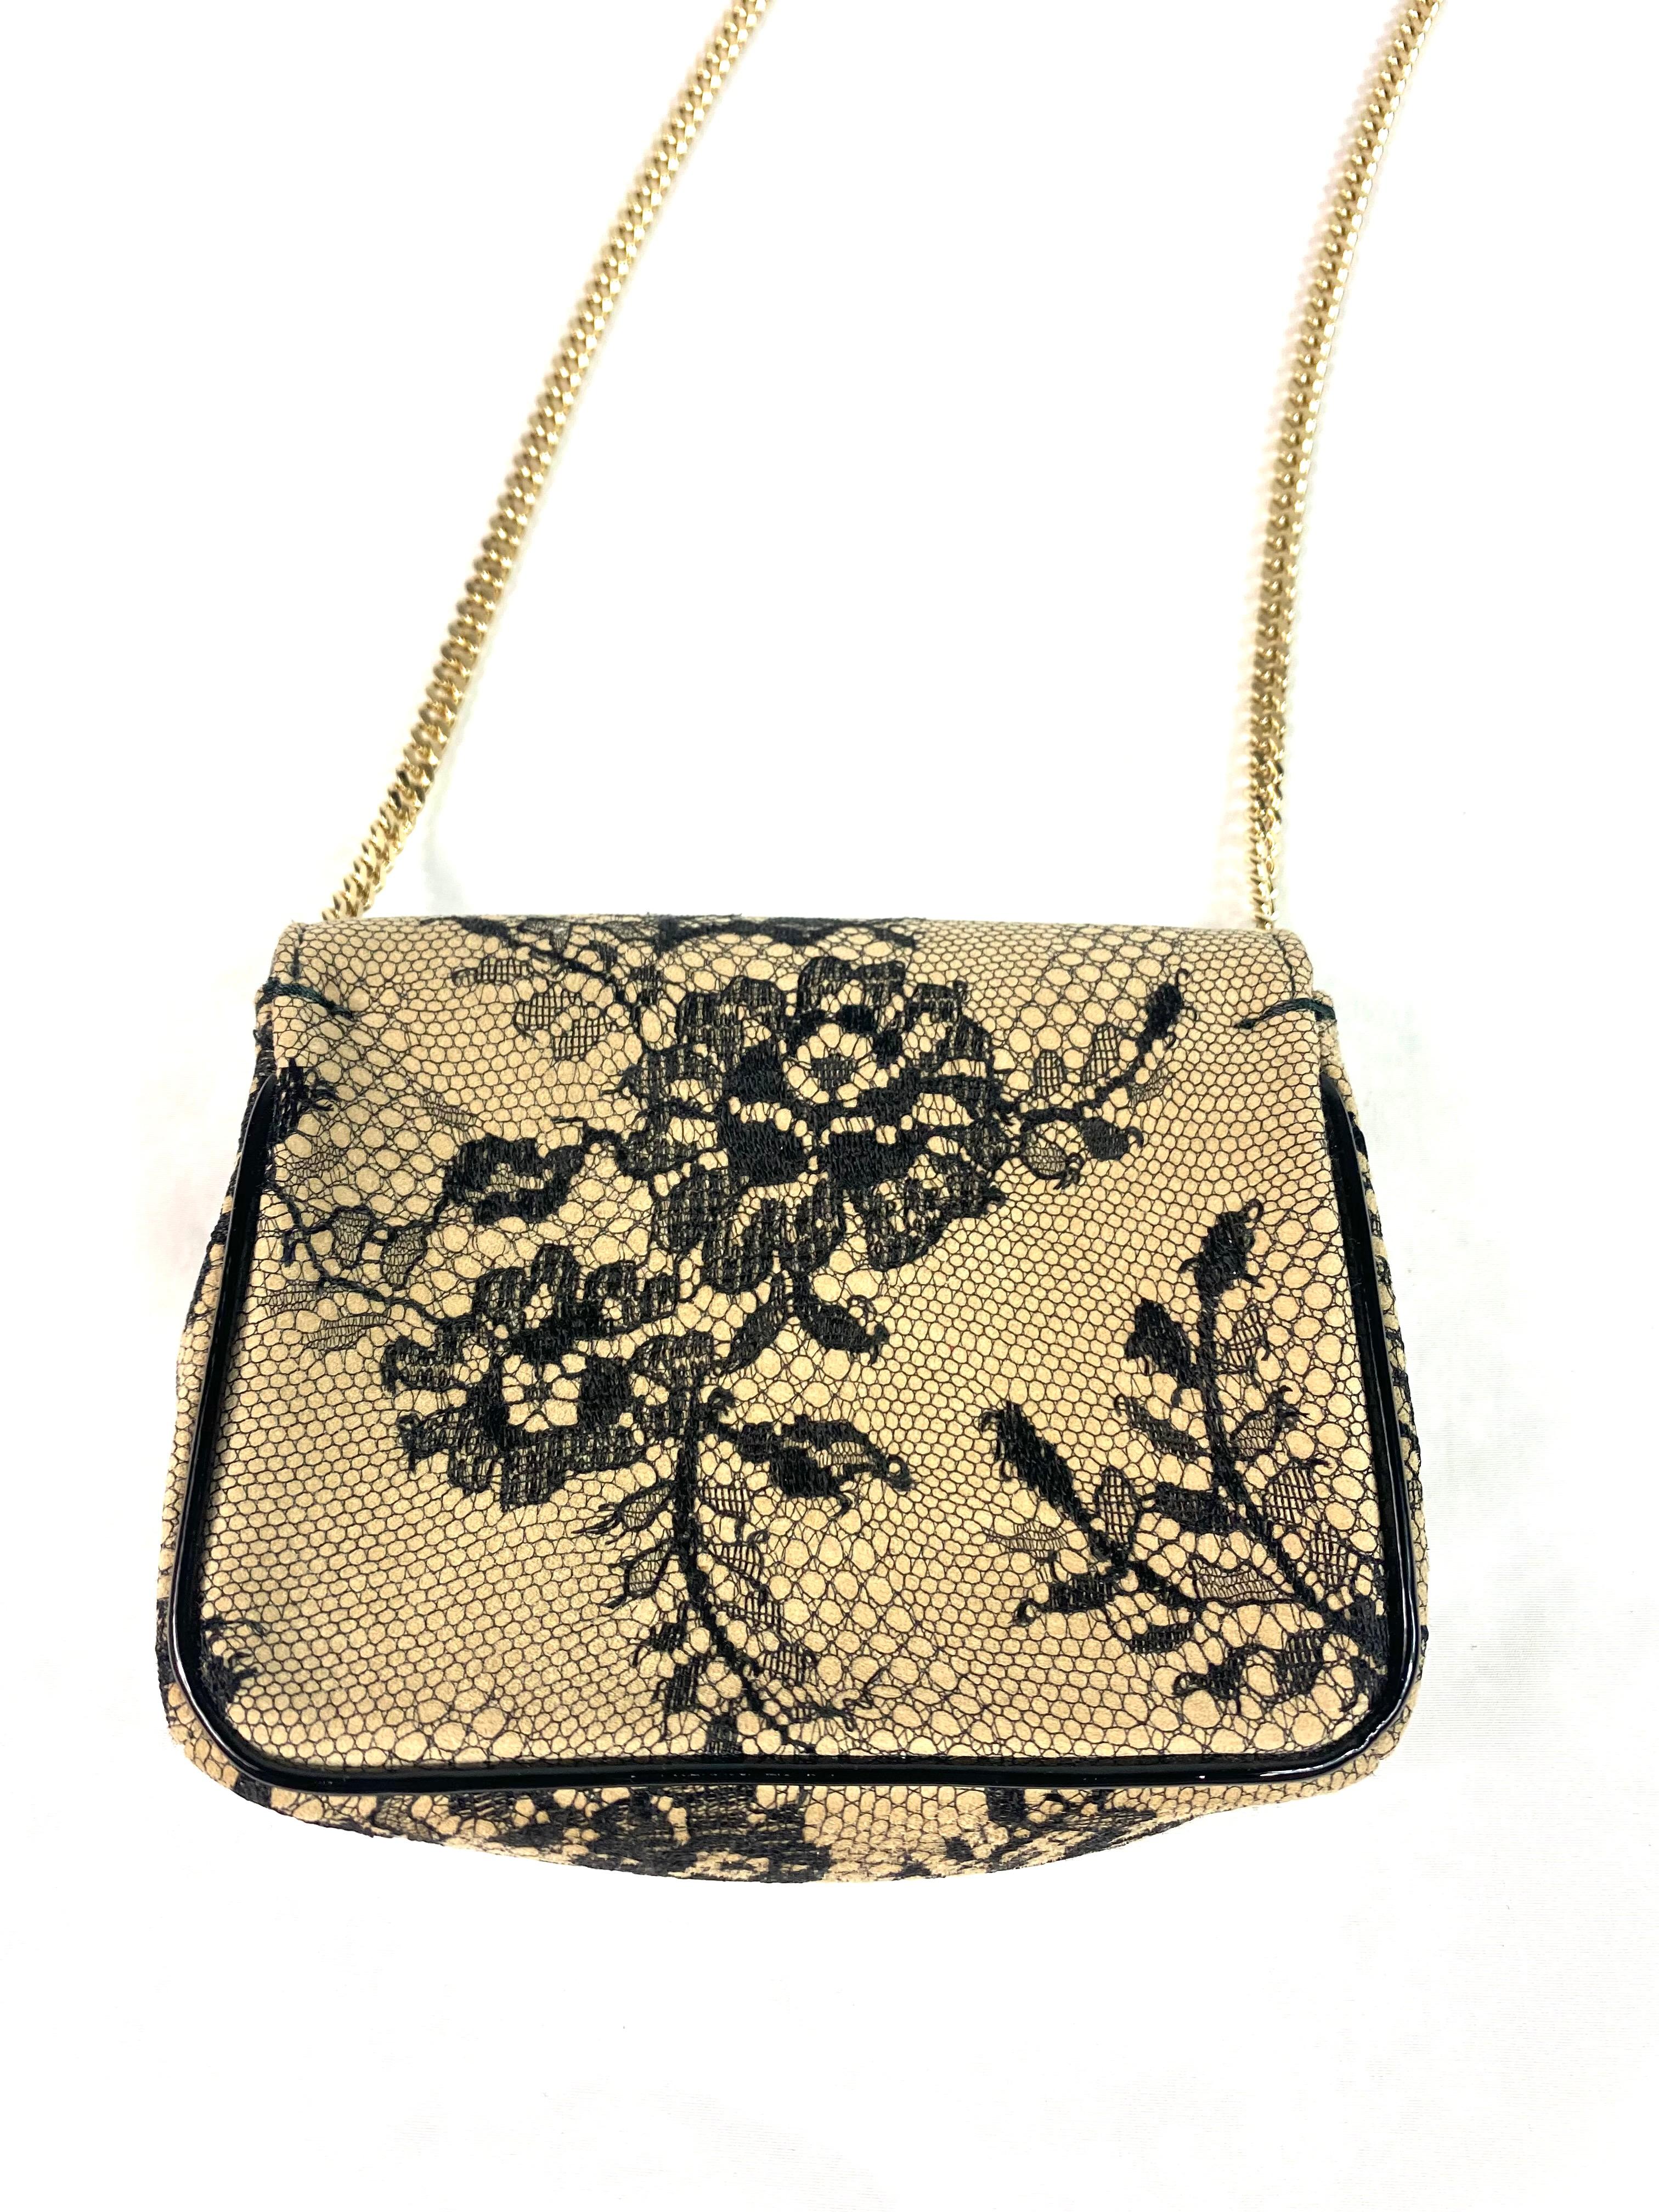 Women's Jimmy Choo Leather and Lace Crossbody Mini Handbag For Sale